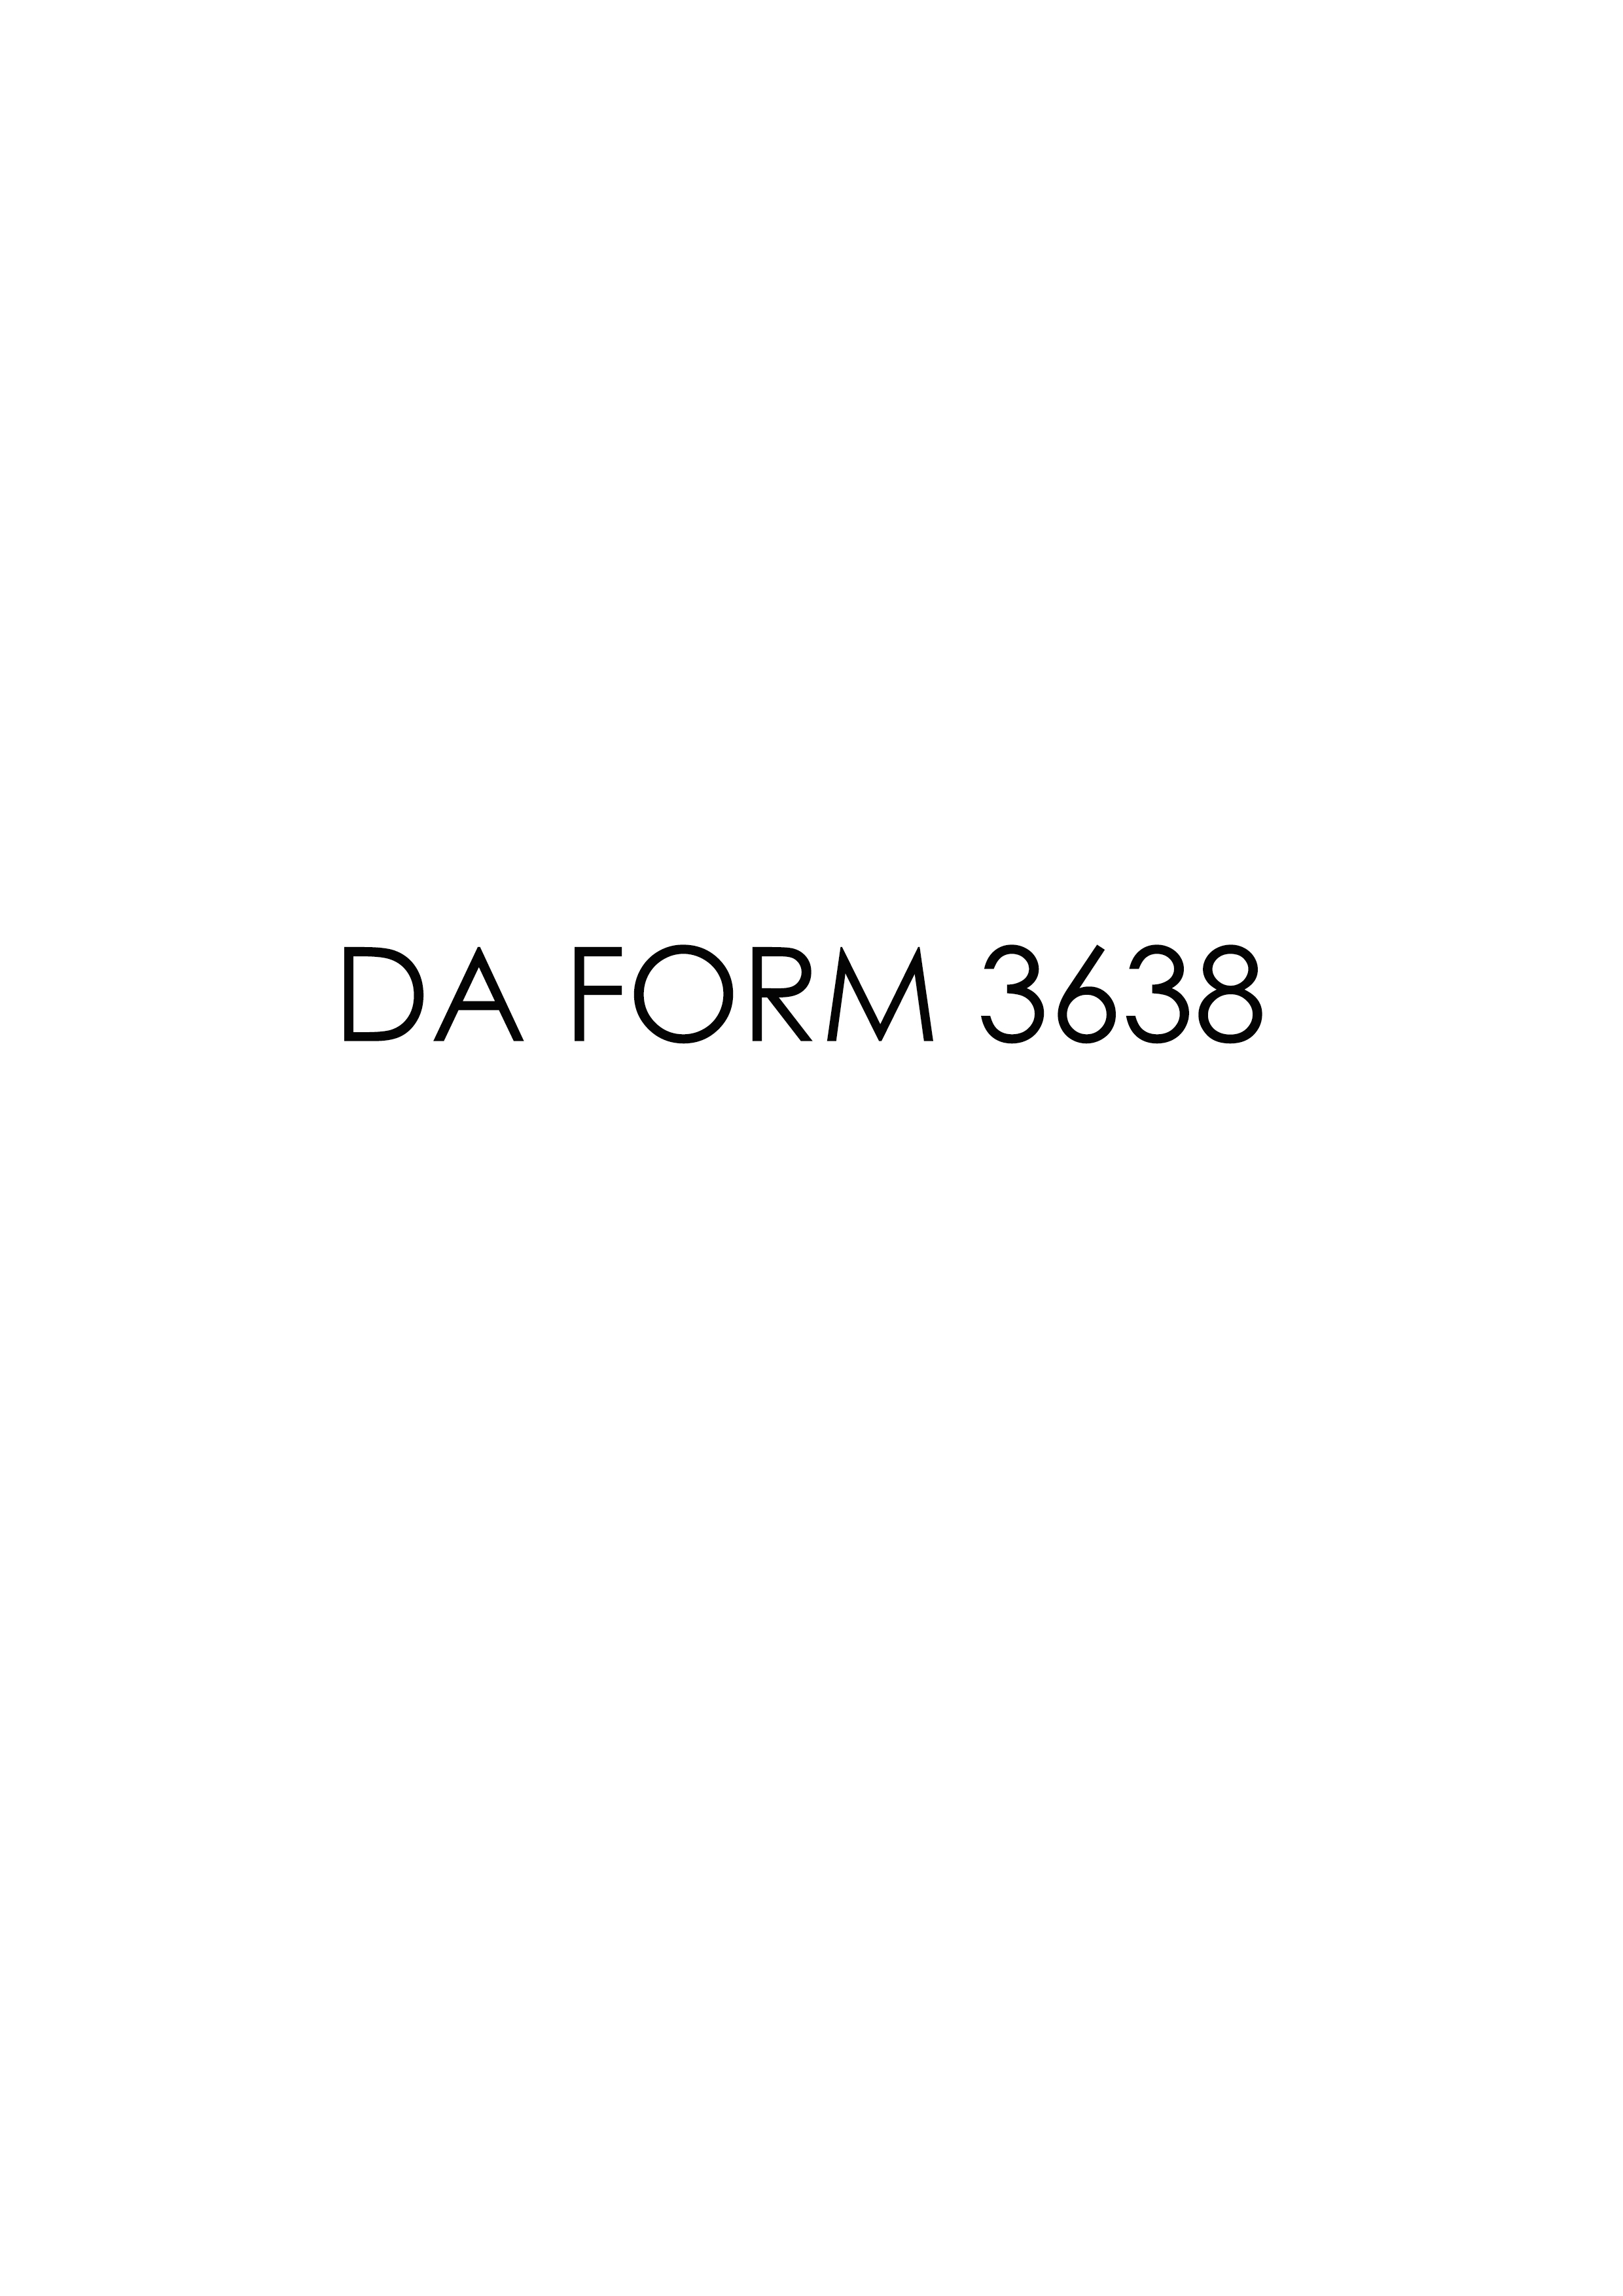 da Form 3638 fillable